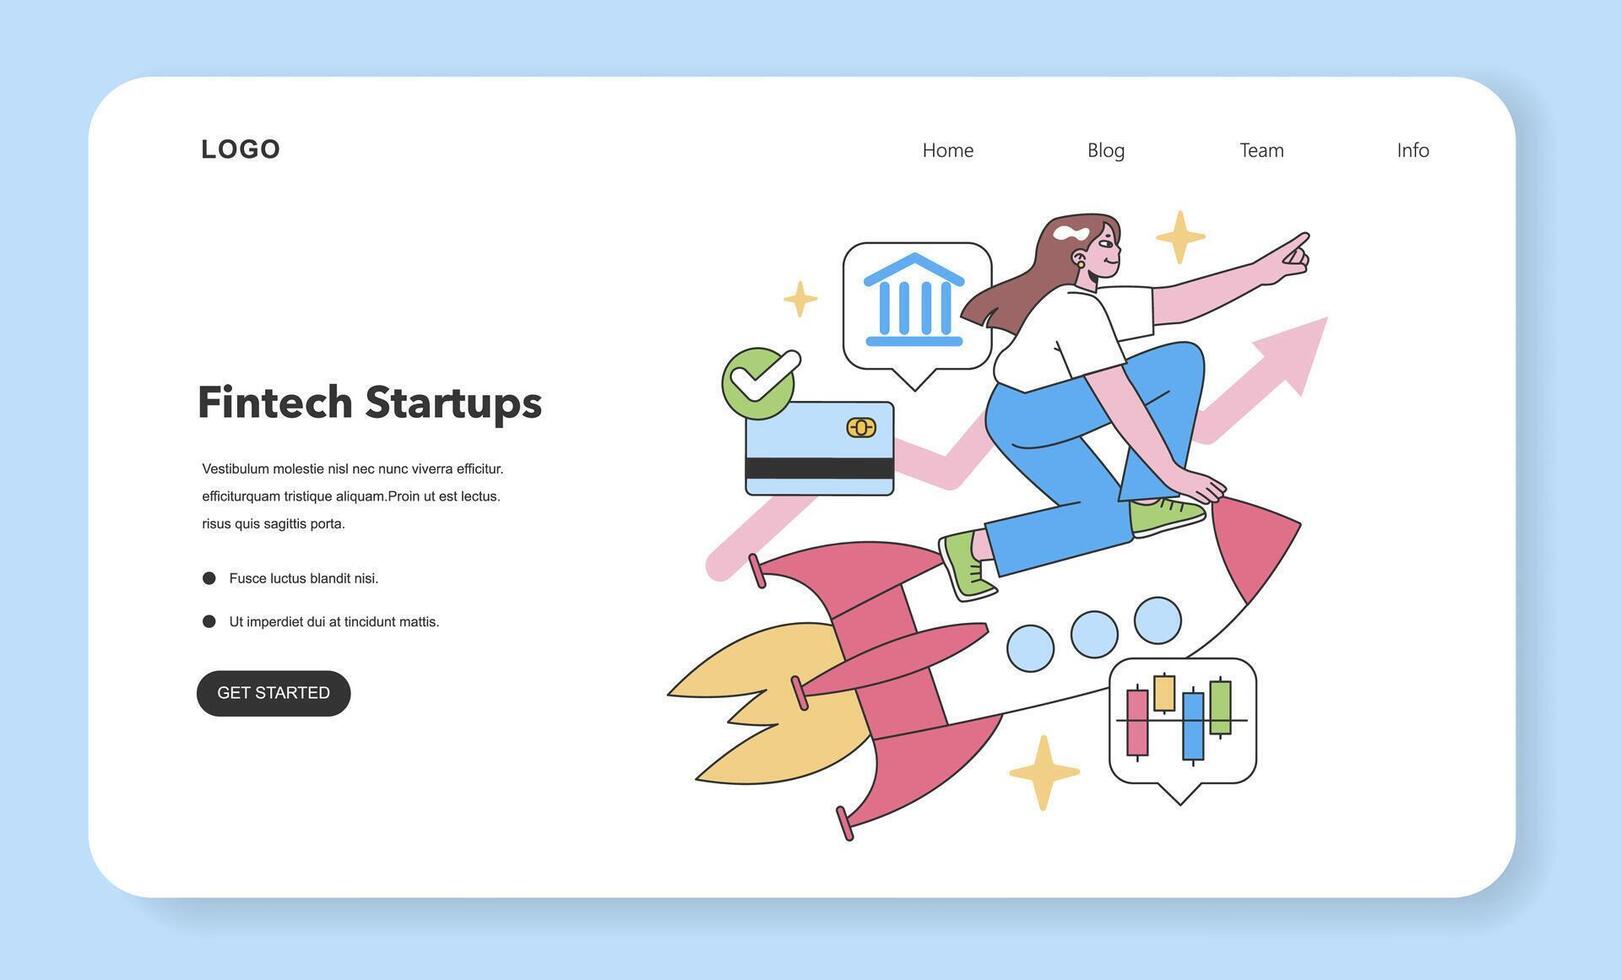 Fintech Startups concept. Flat vector illustration